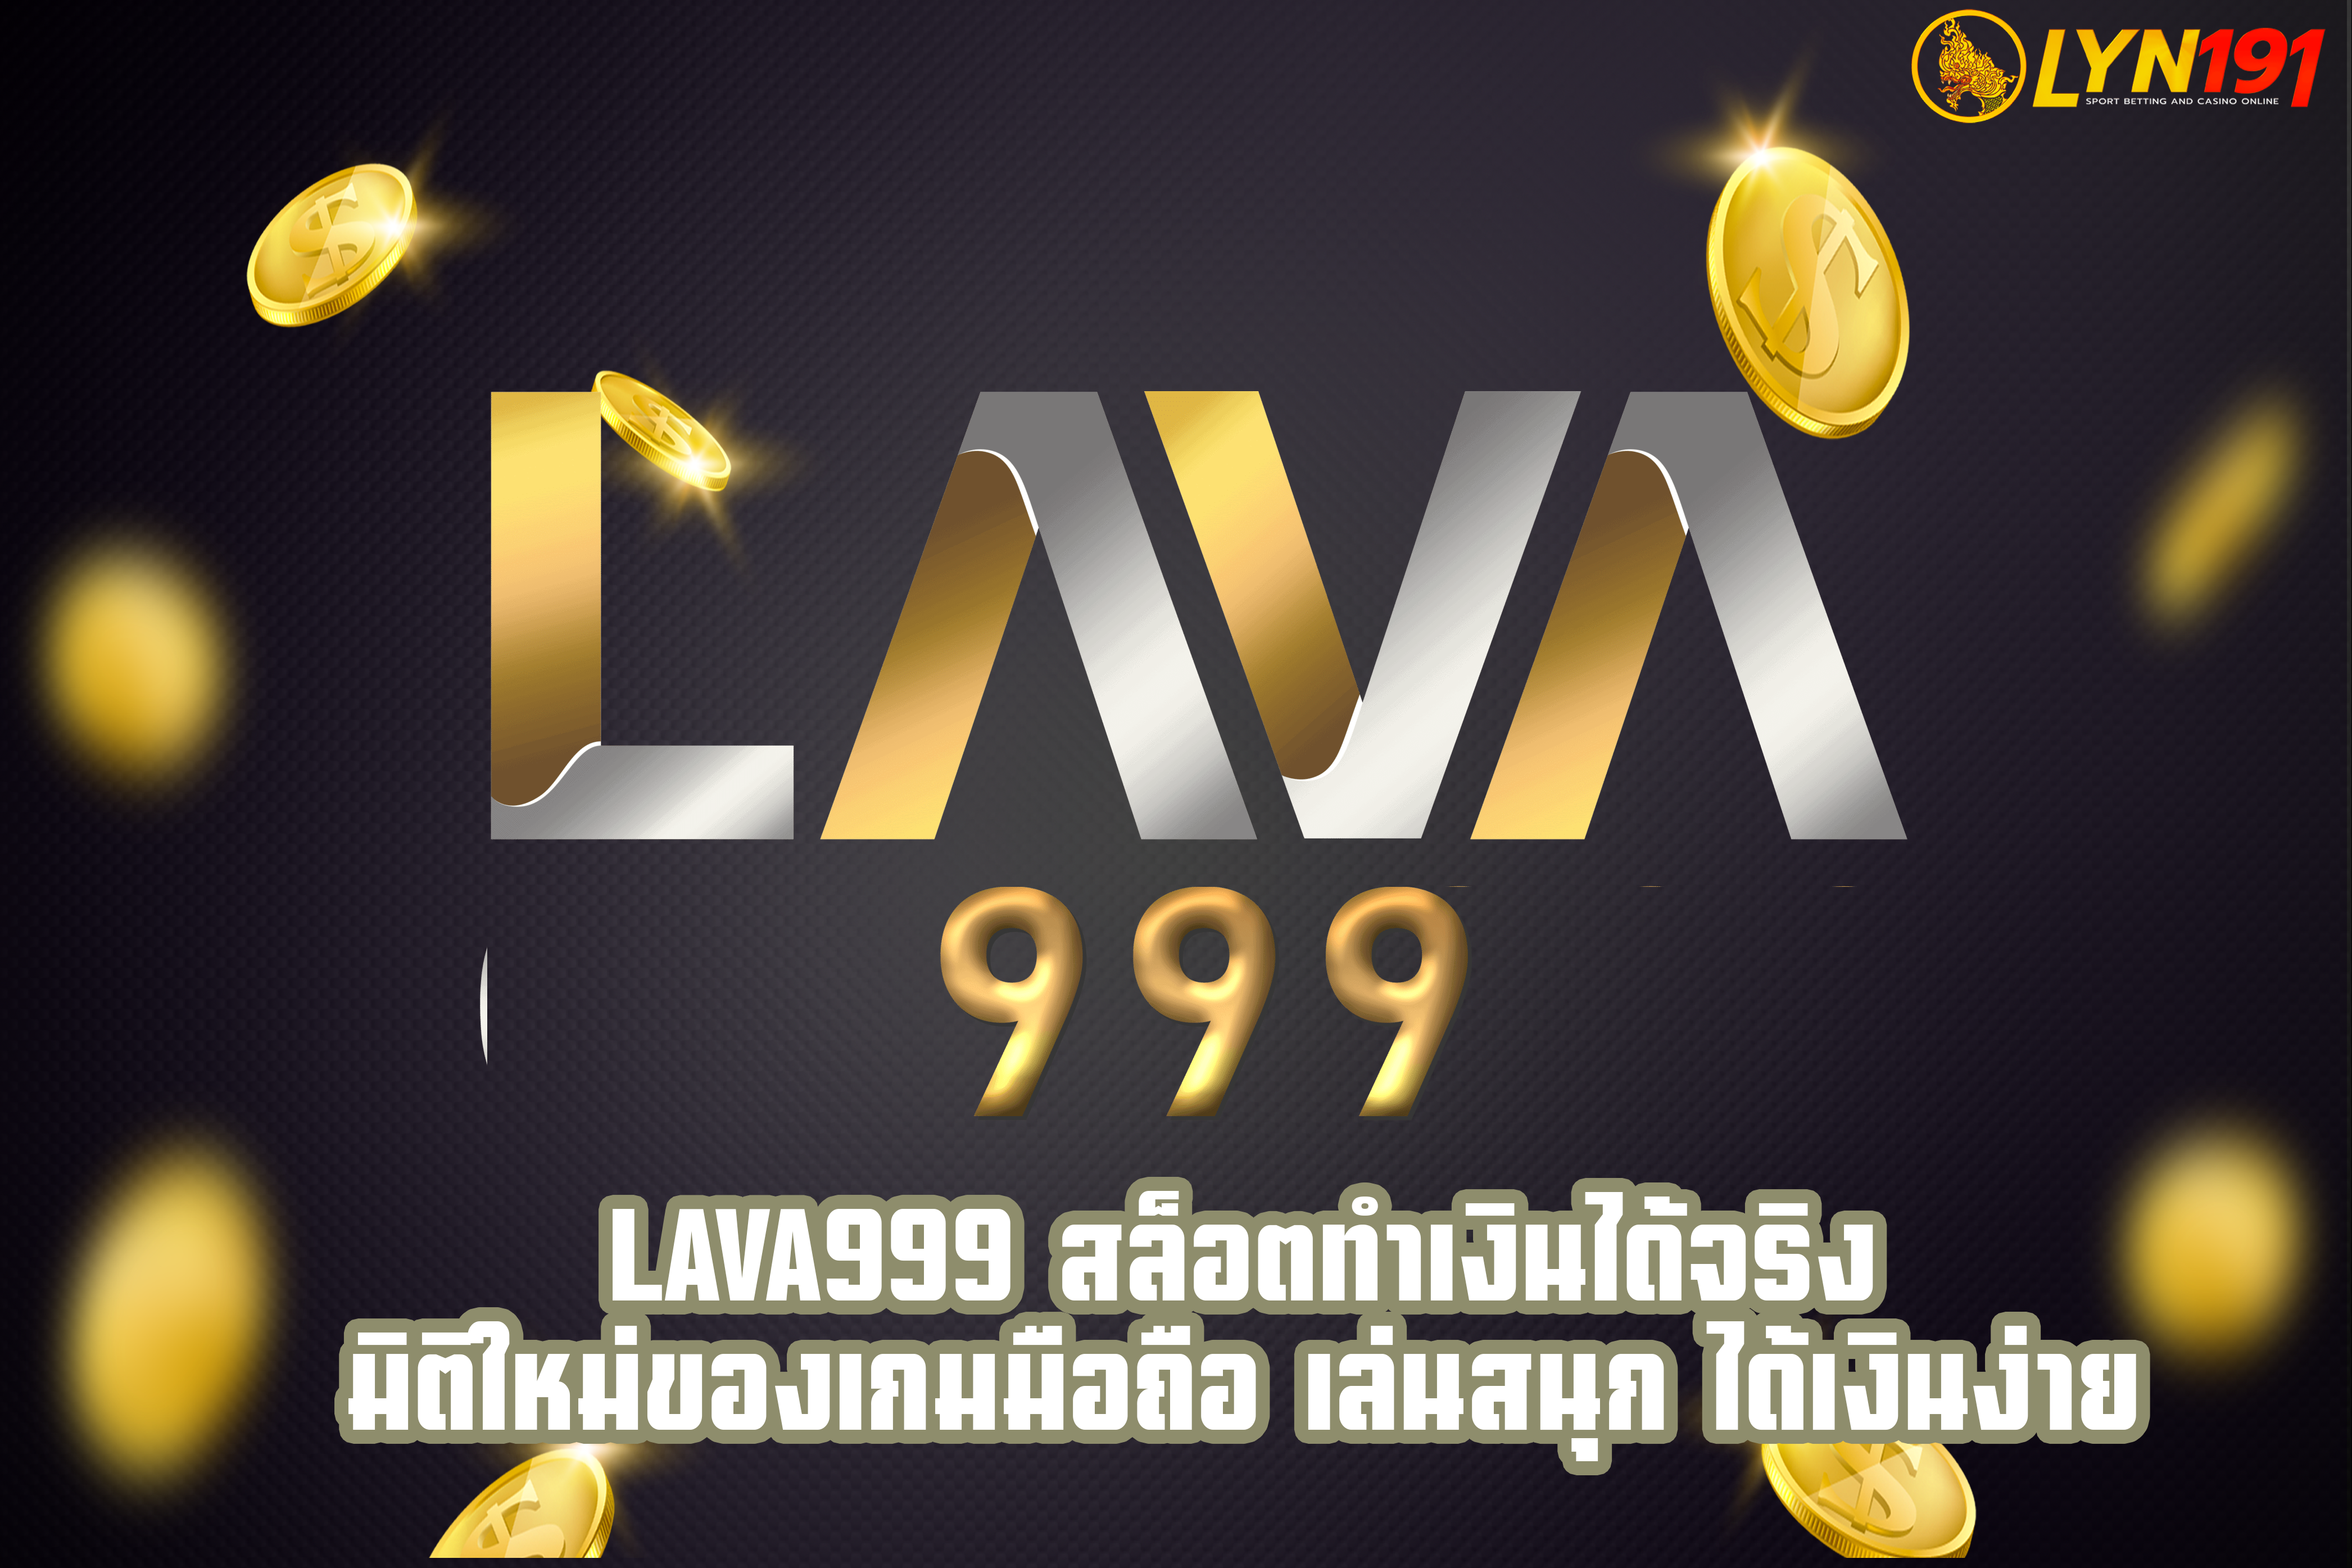 LAVA999